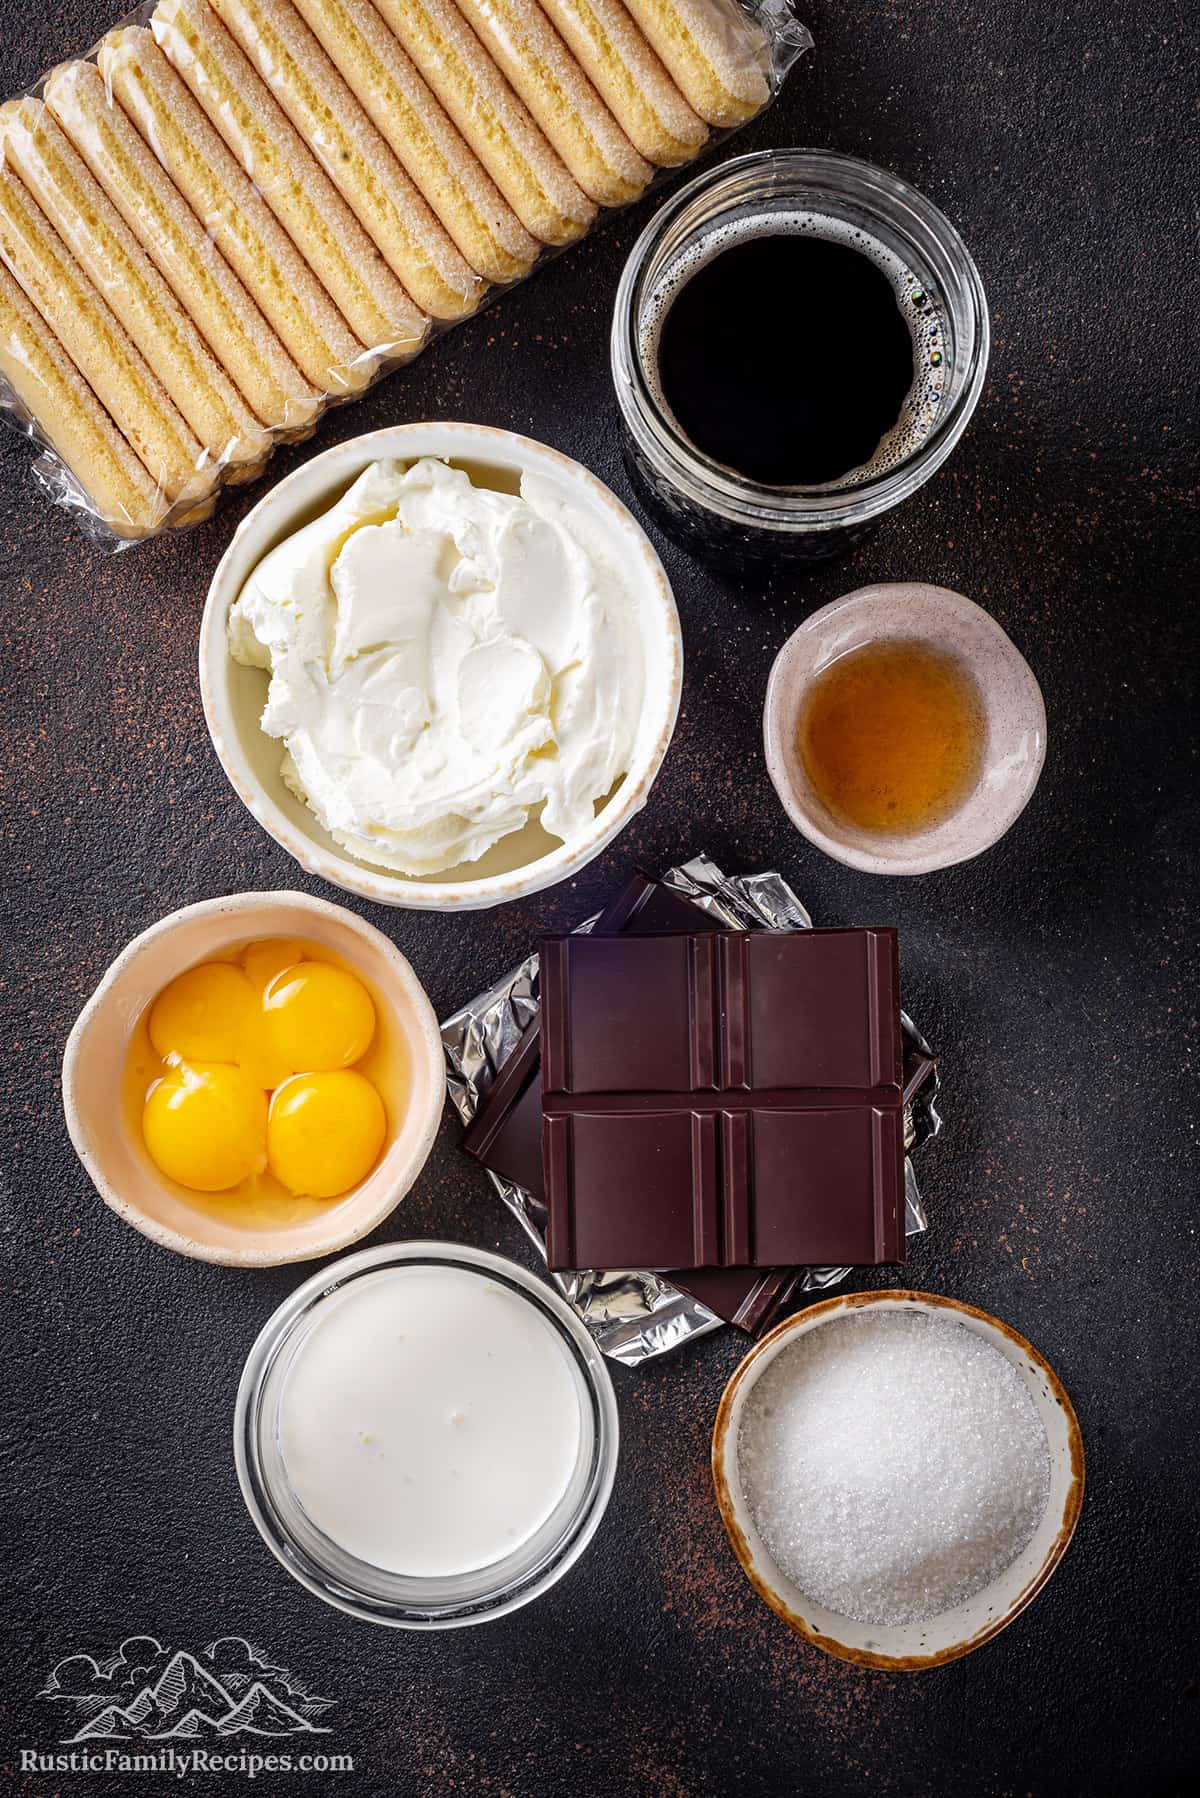 Tiramisu ingredients: mascarpone, egg yolks, coffee, sugar, heavy cream, Grand Marnier, ladyfingers, and chocolate.